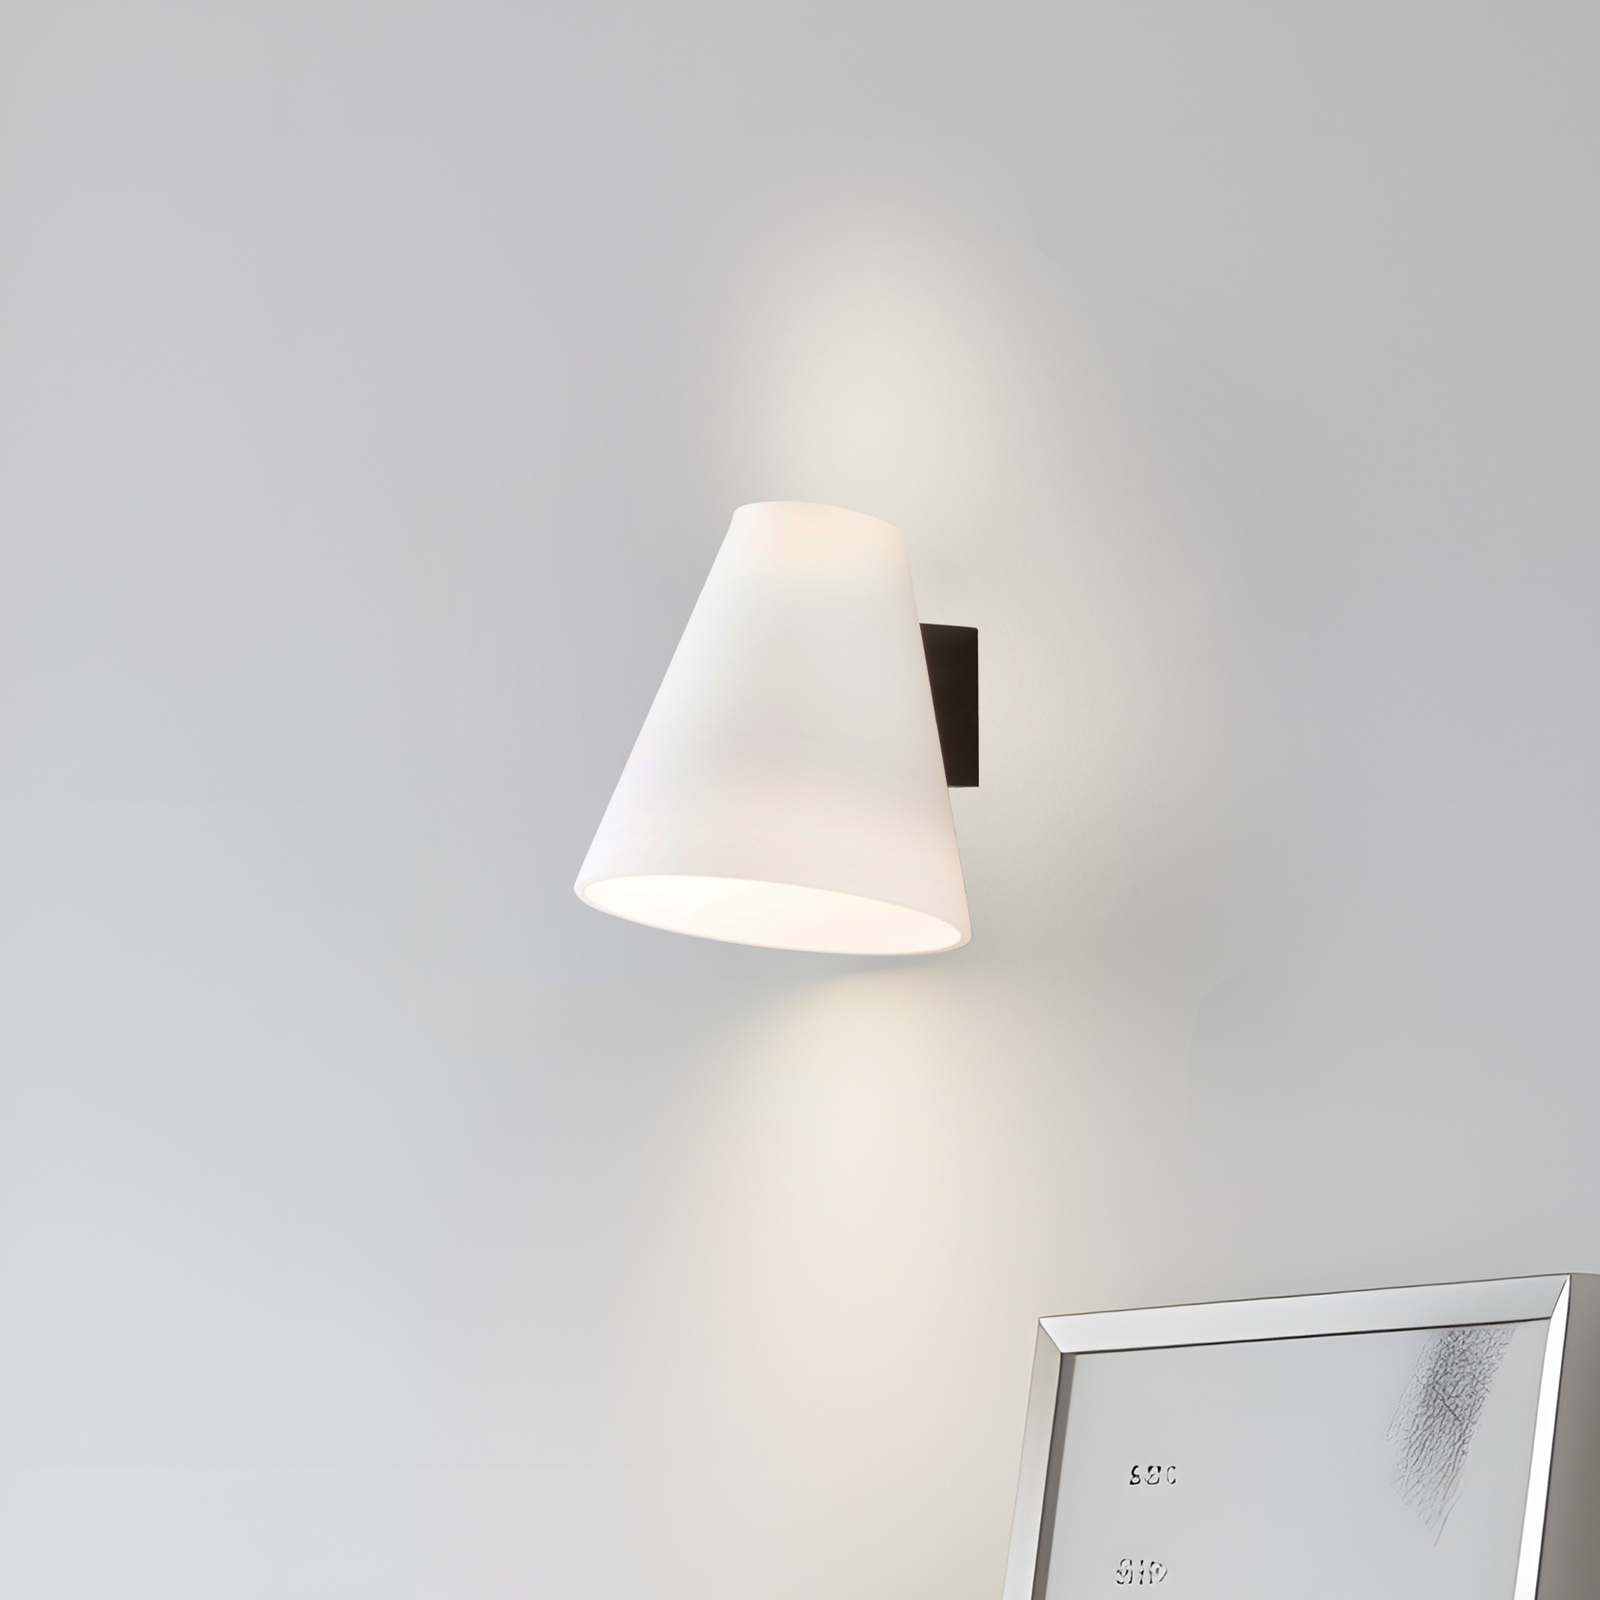 Lucande Timido wall light, white / black